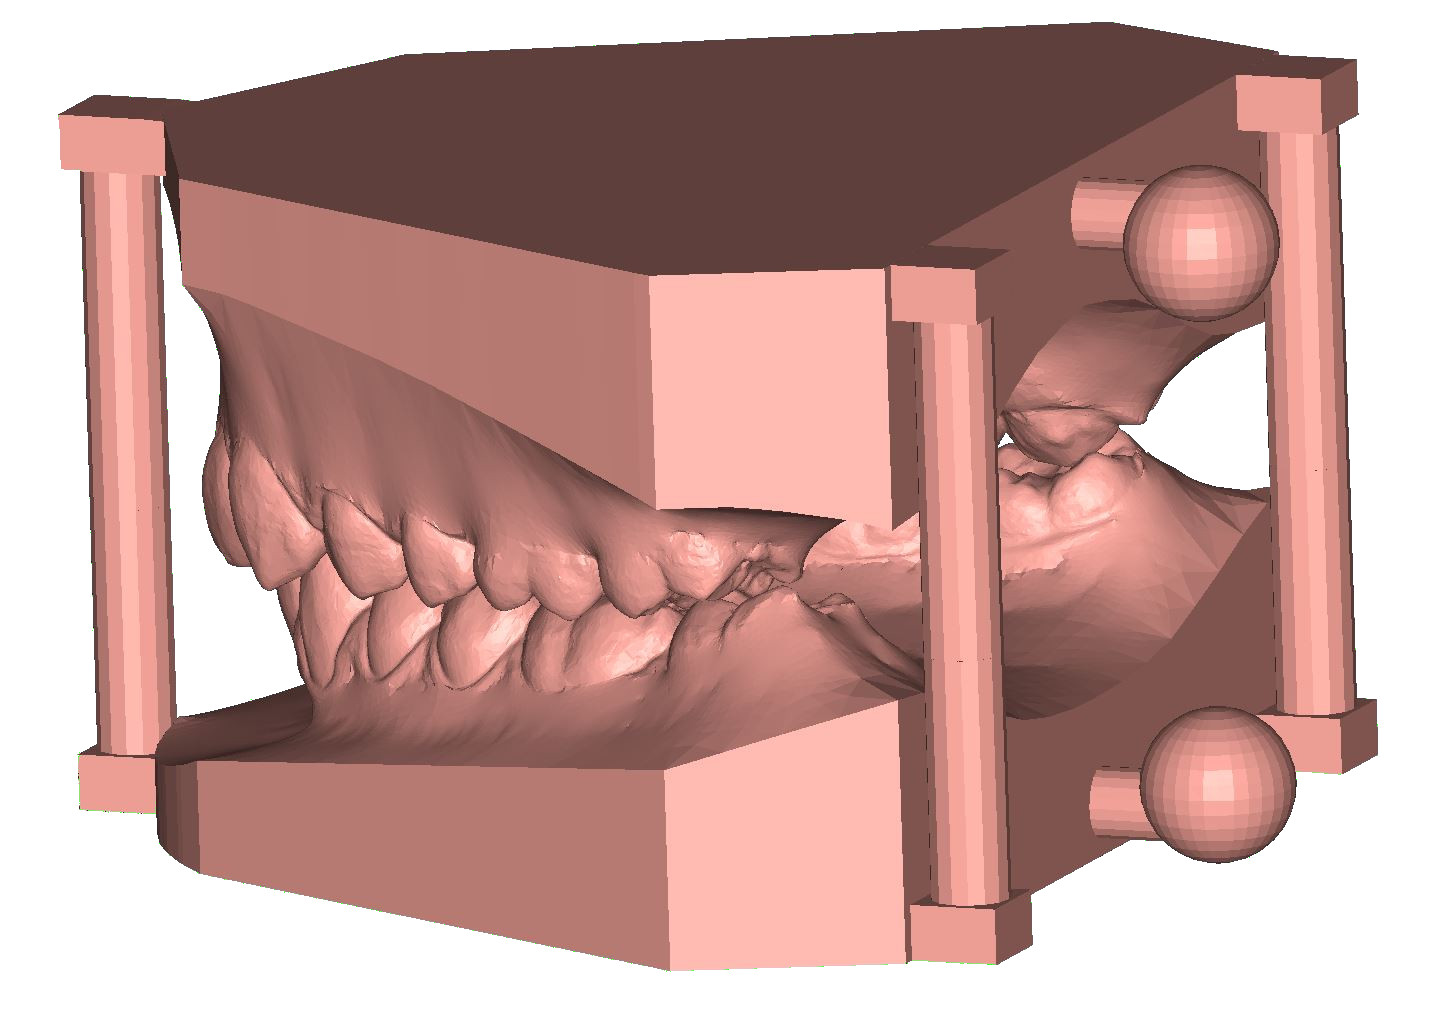 ArchBase study base tripod twister 3D dental model DeltaFace